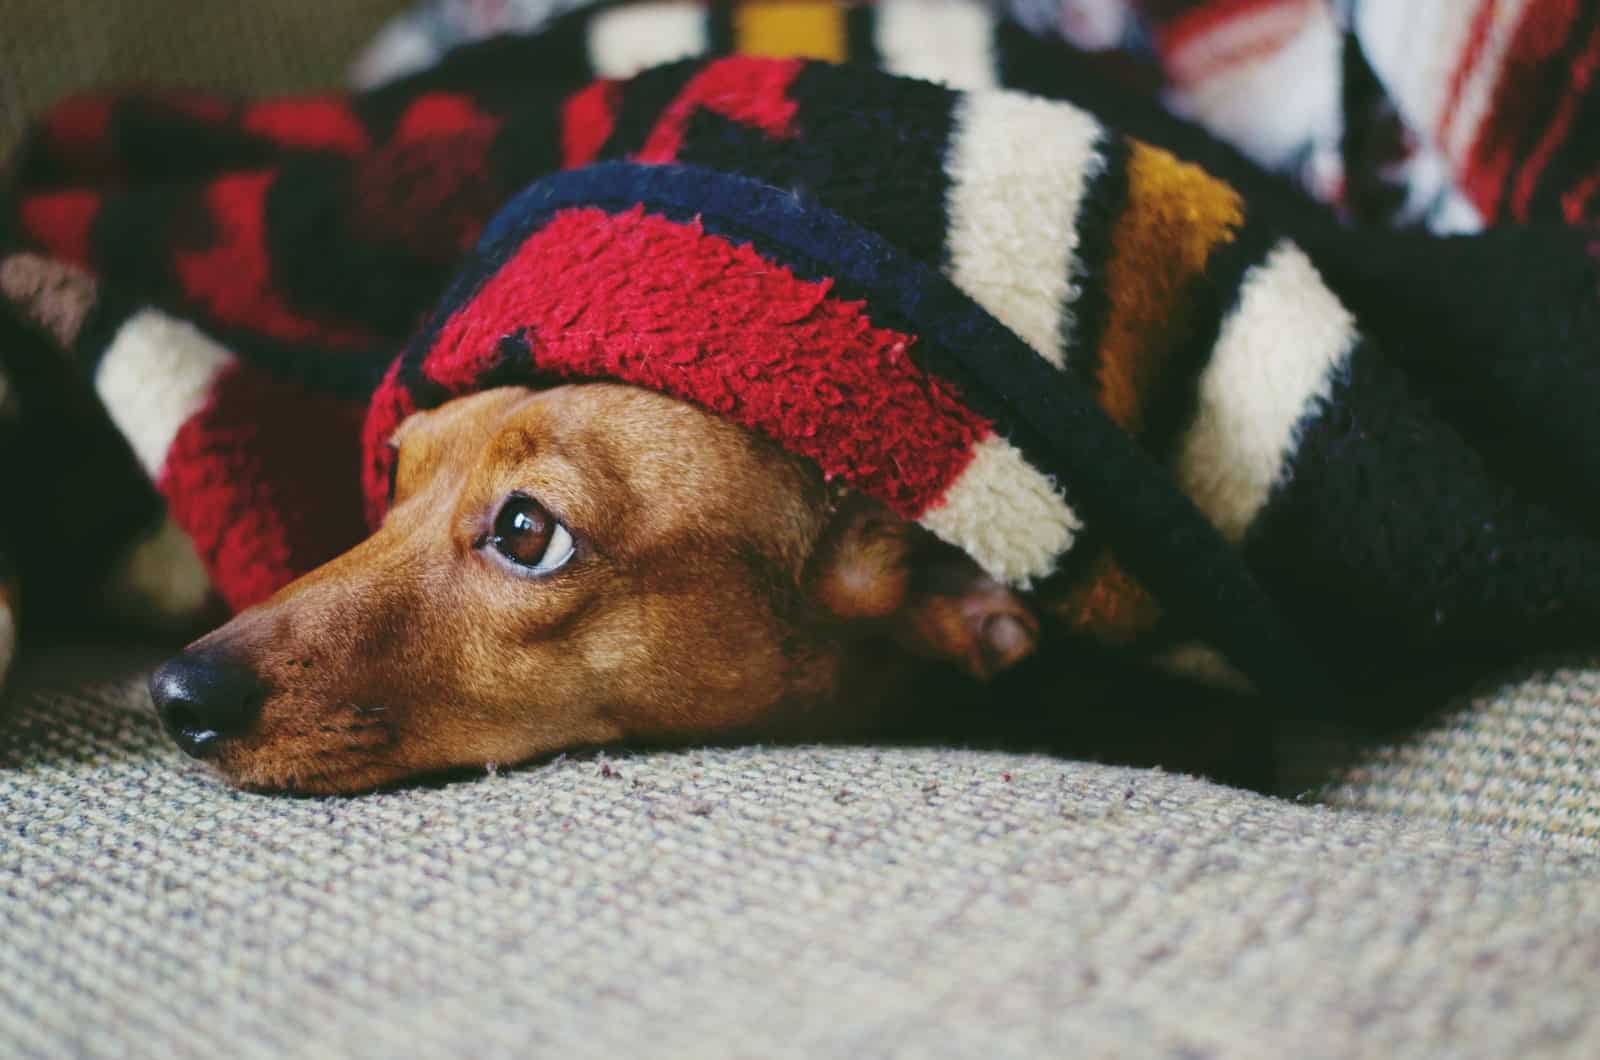 dog under a blanket